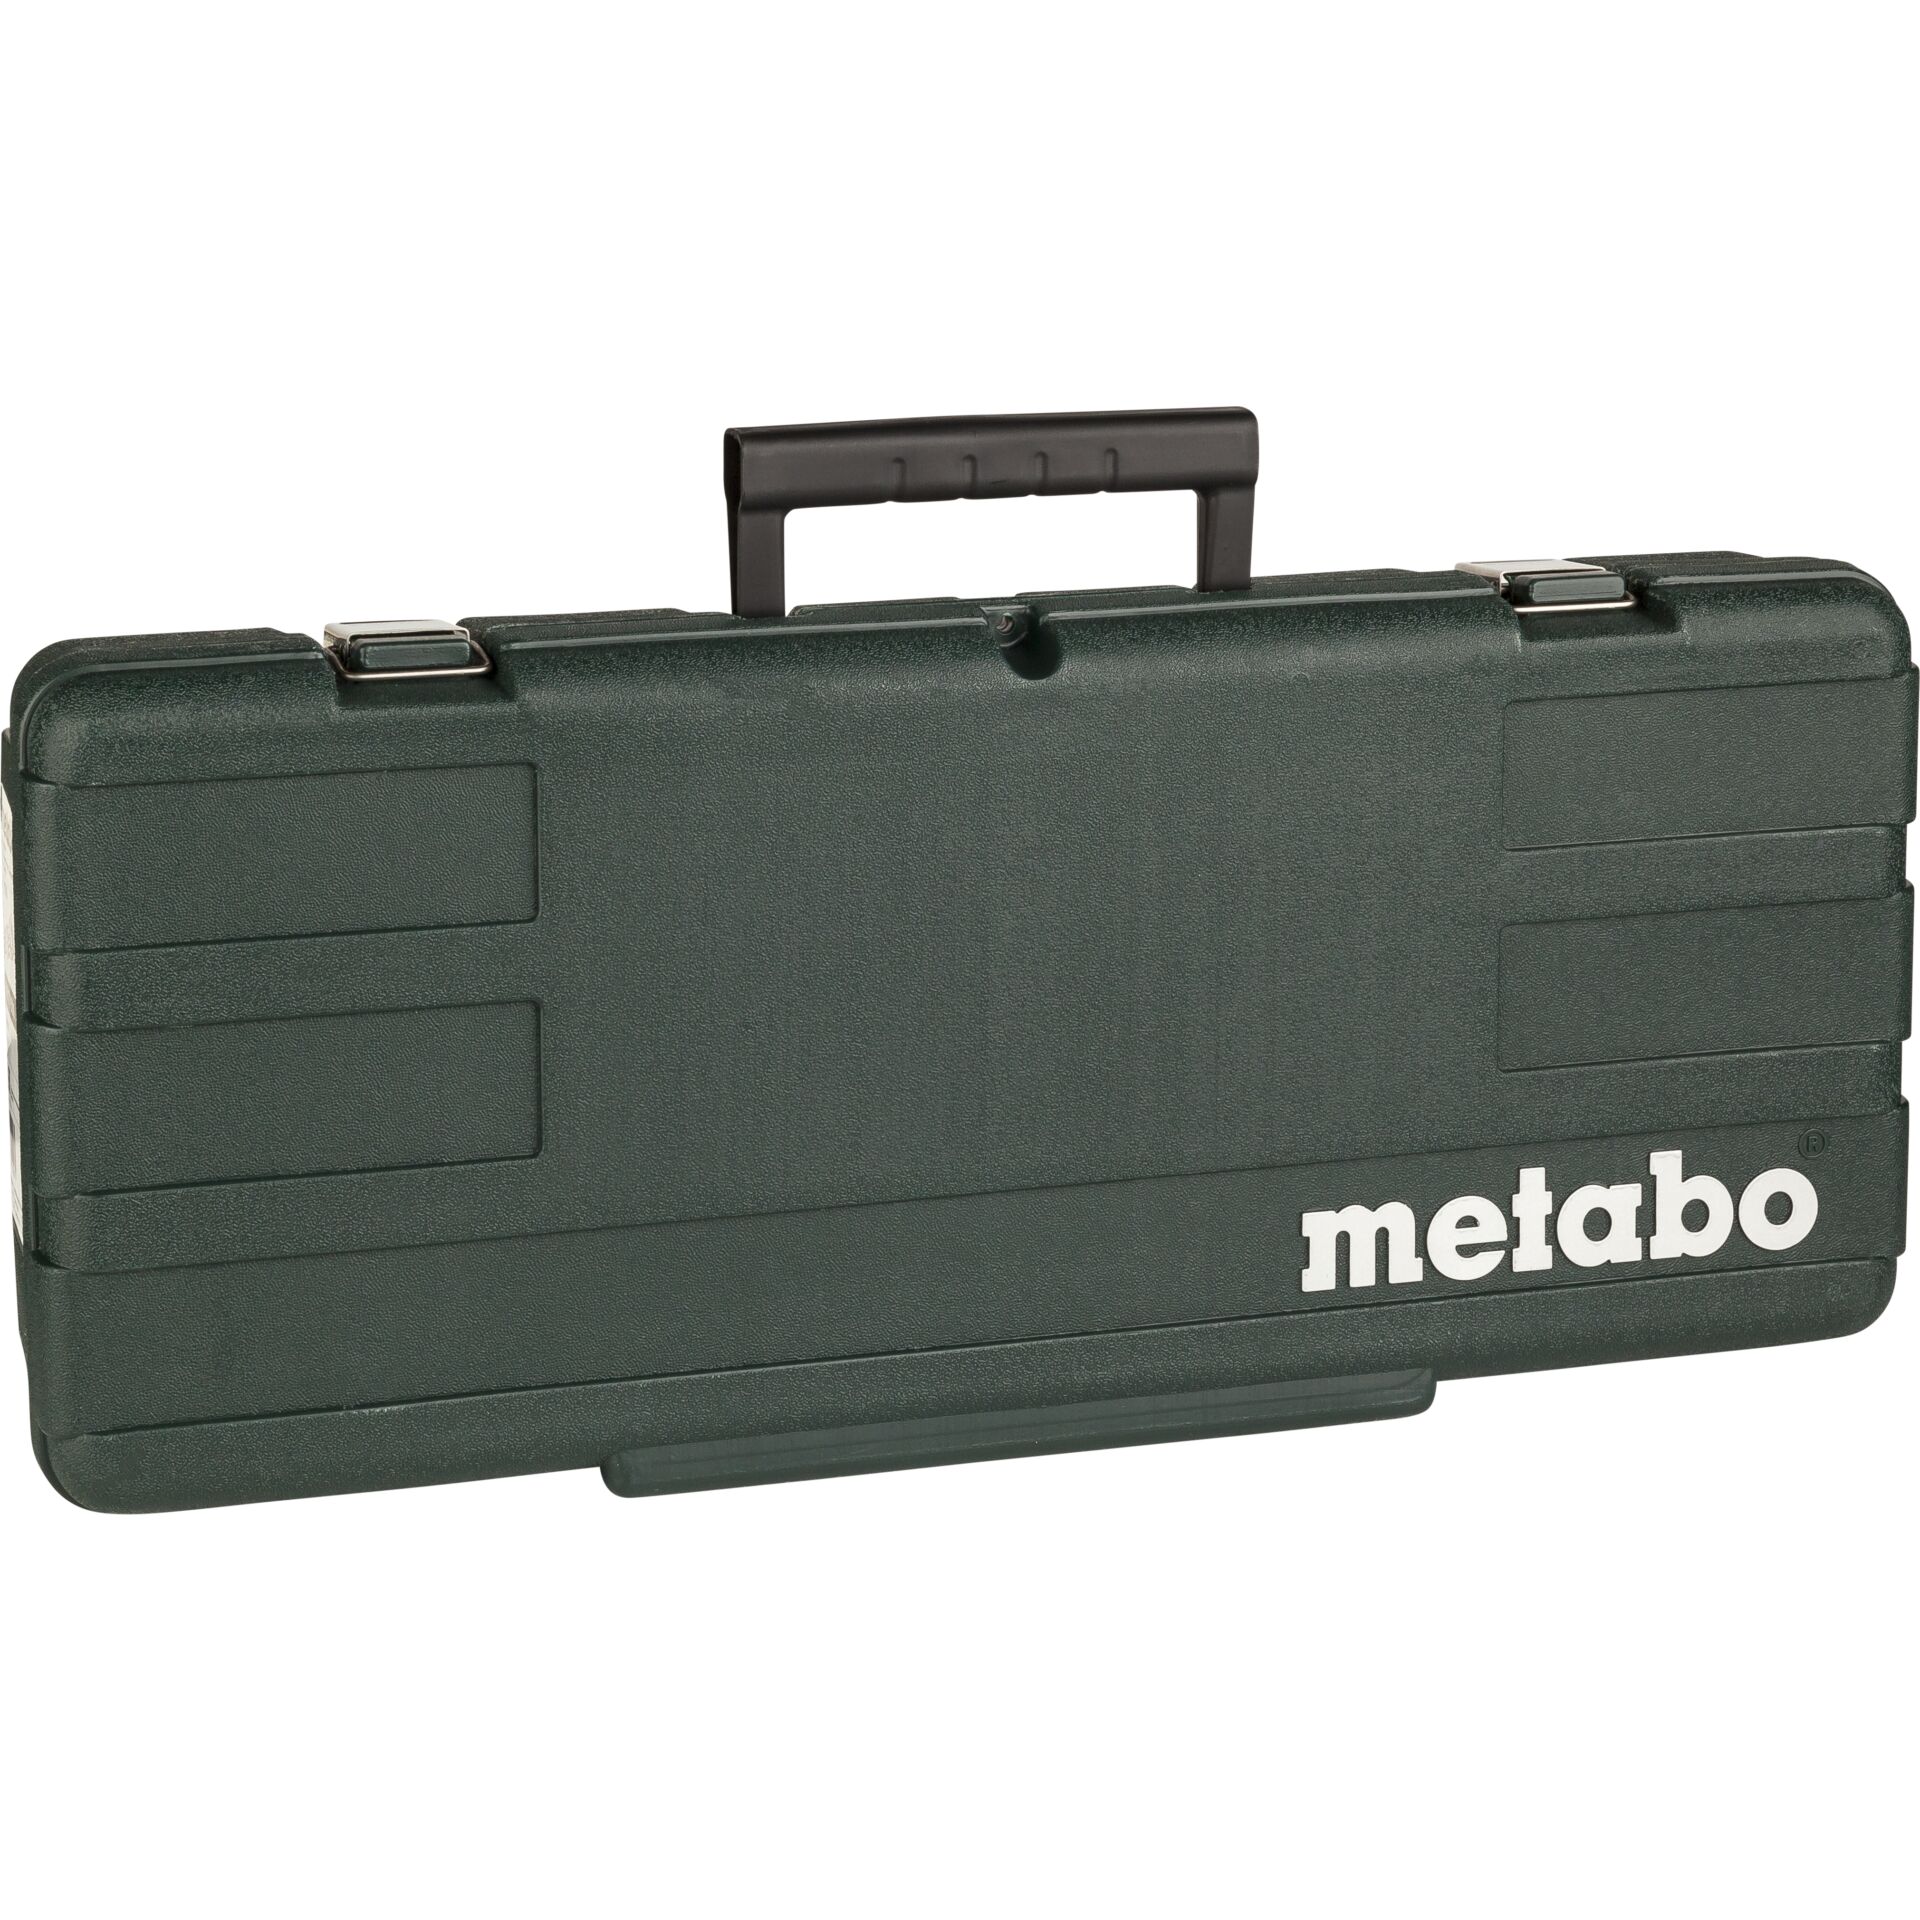 28 (606177500) Hub-Länge Säbelsäge W 1100 Metabo Hardware/Electronic -SSE -Metabo mm 1100